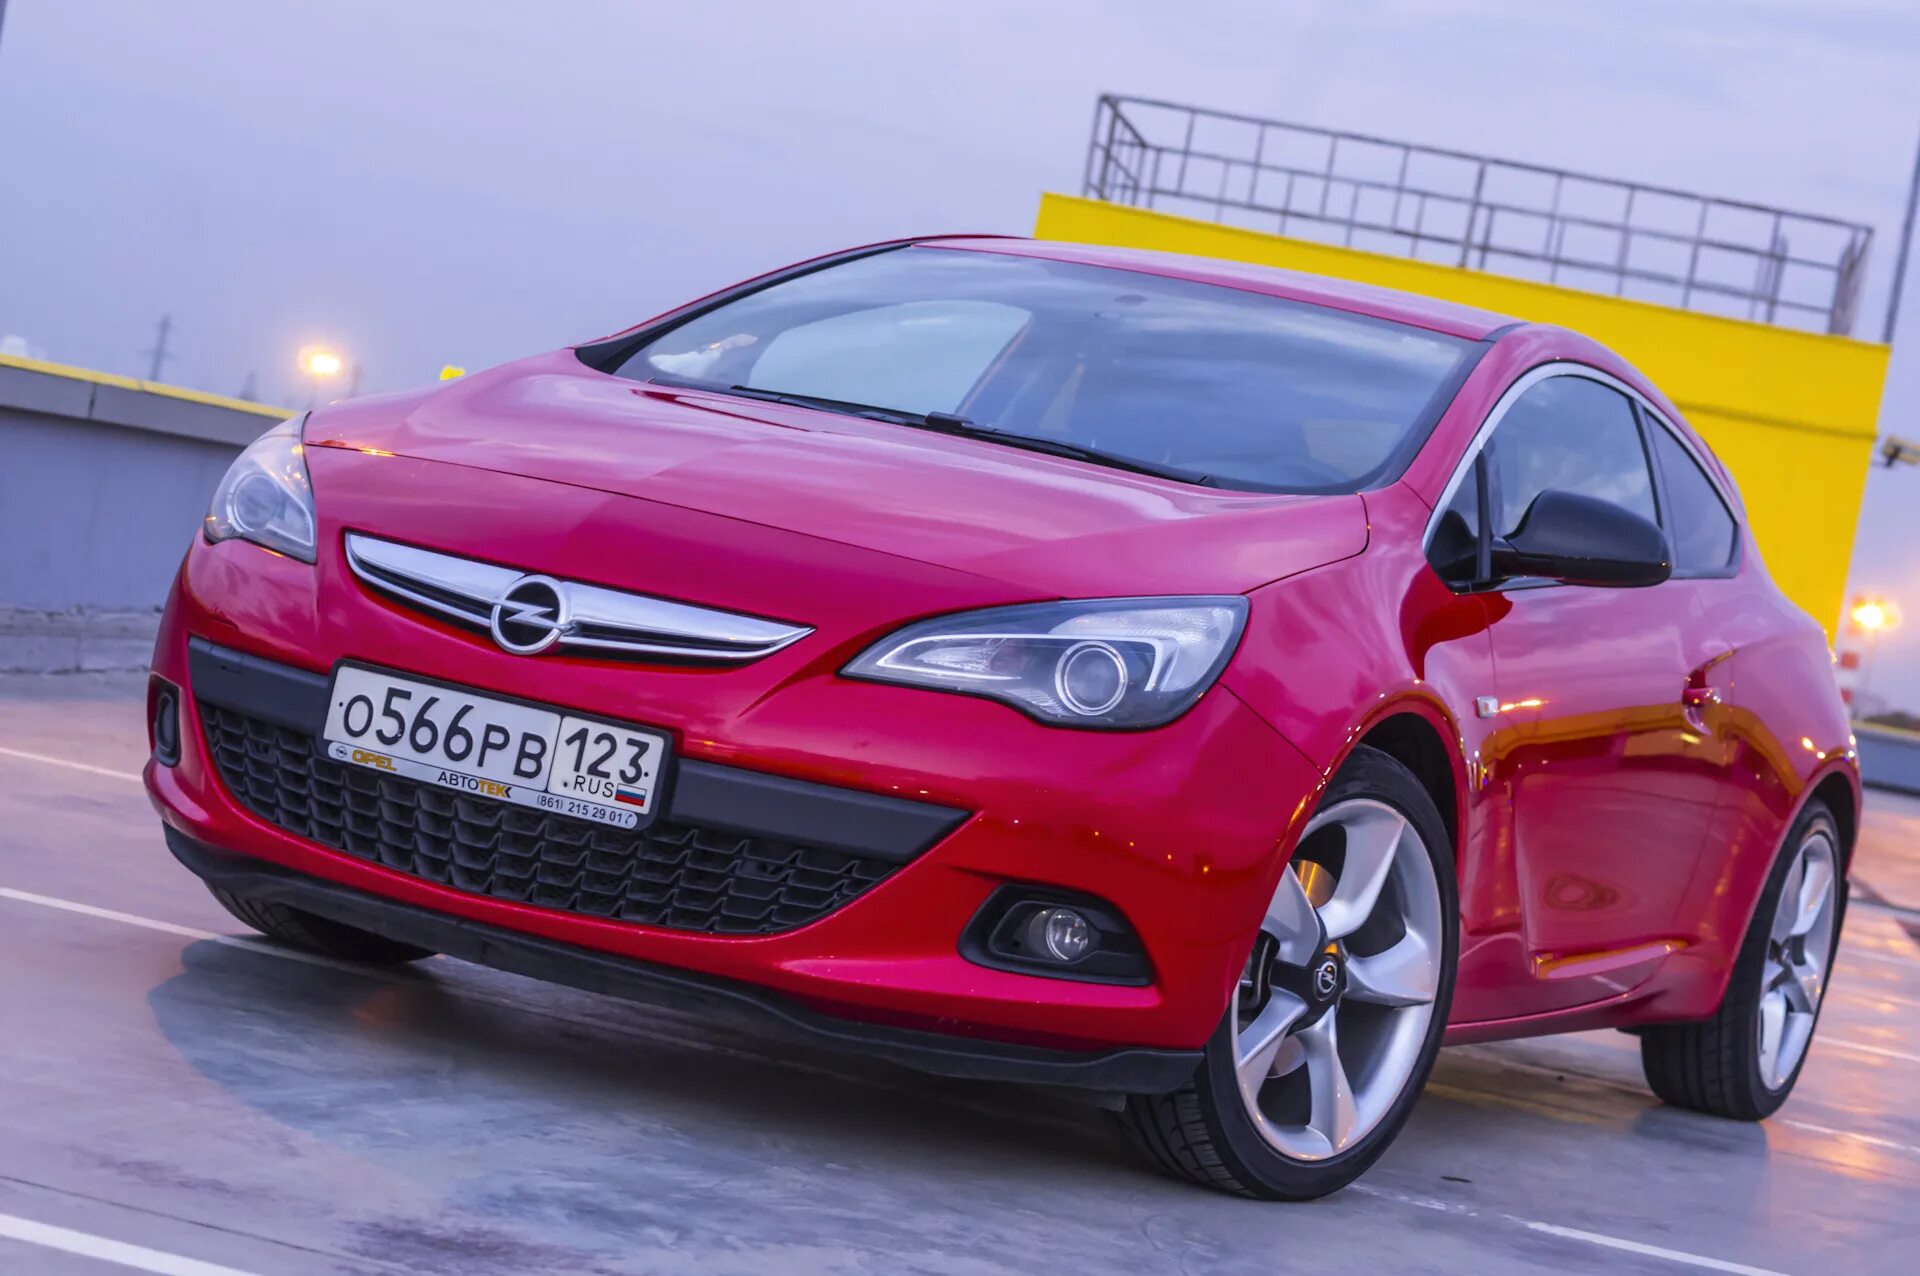 Opel Astra GTC 1.6. Opel Astra GTC Sport 2020. Opel Astra GTC 2016. Opel Astra GTC 2020 купе. Купить опель нижний новгород